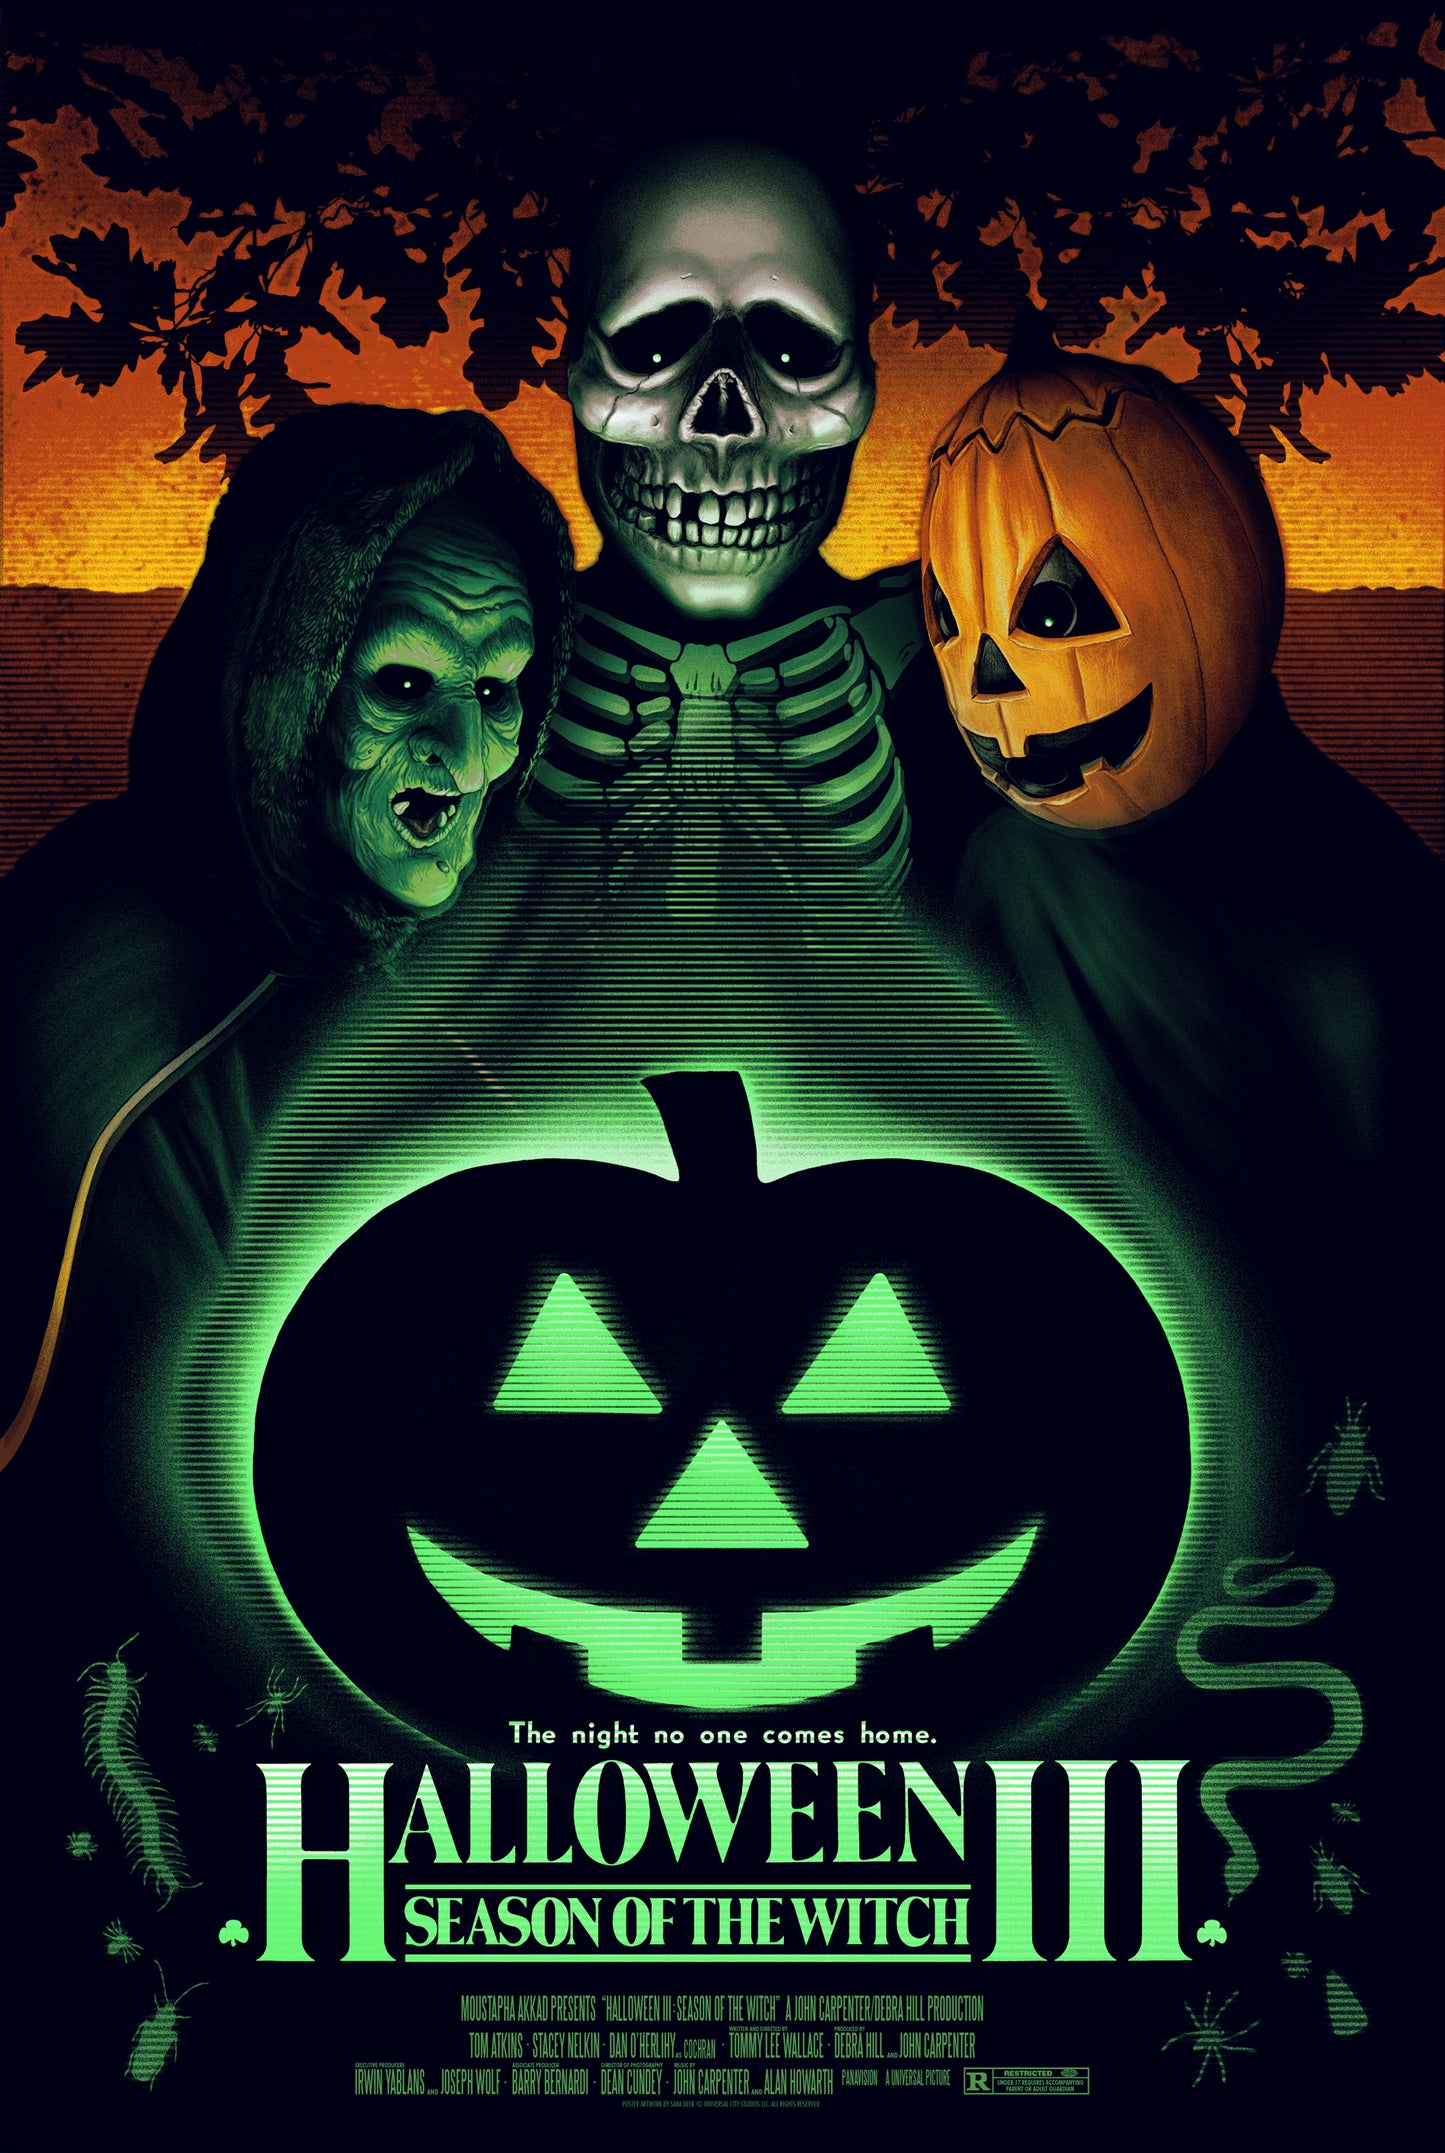 Sara Deck "Halloween III: Season of the Witch" GID Variant